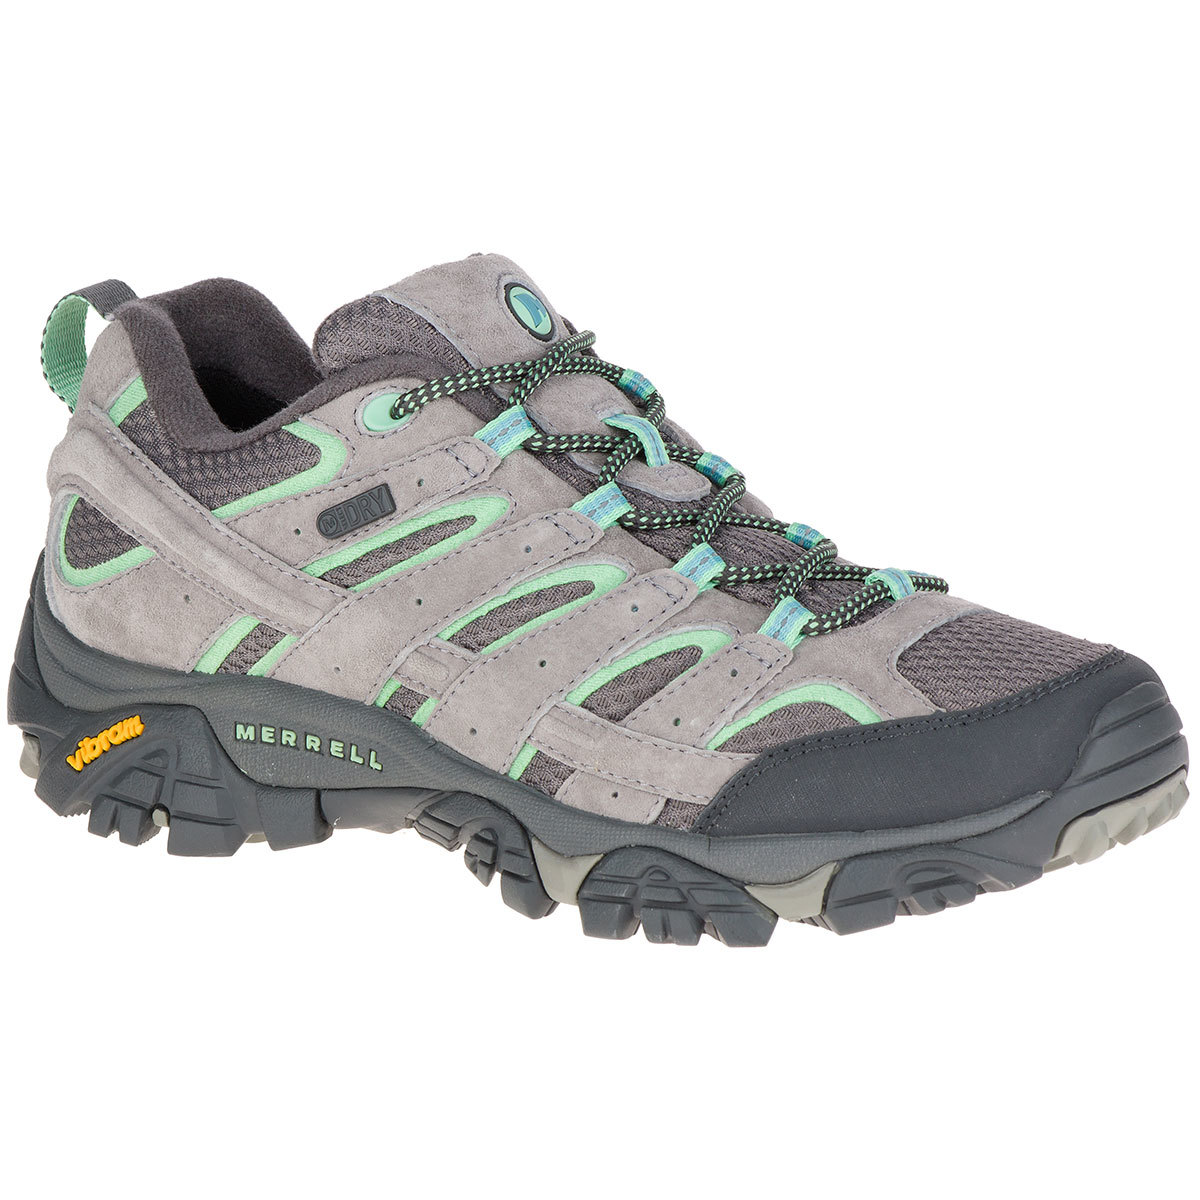 Merrell Women's Moab 2 Low Waterproof Hiking Shoes, Drizzle/mint - Black, 10